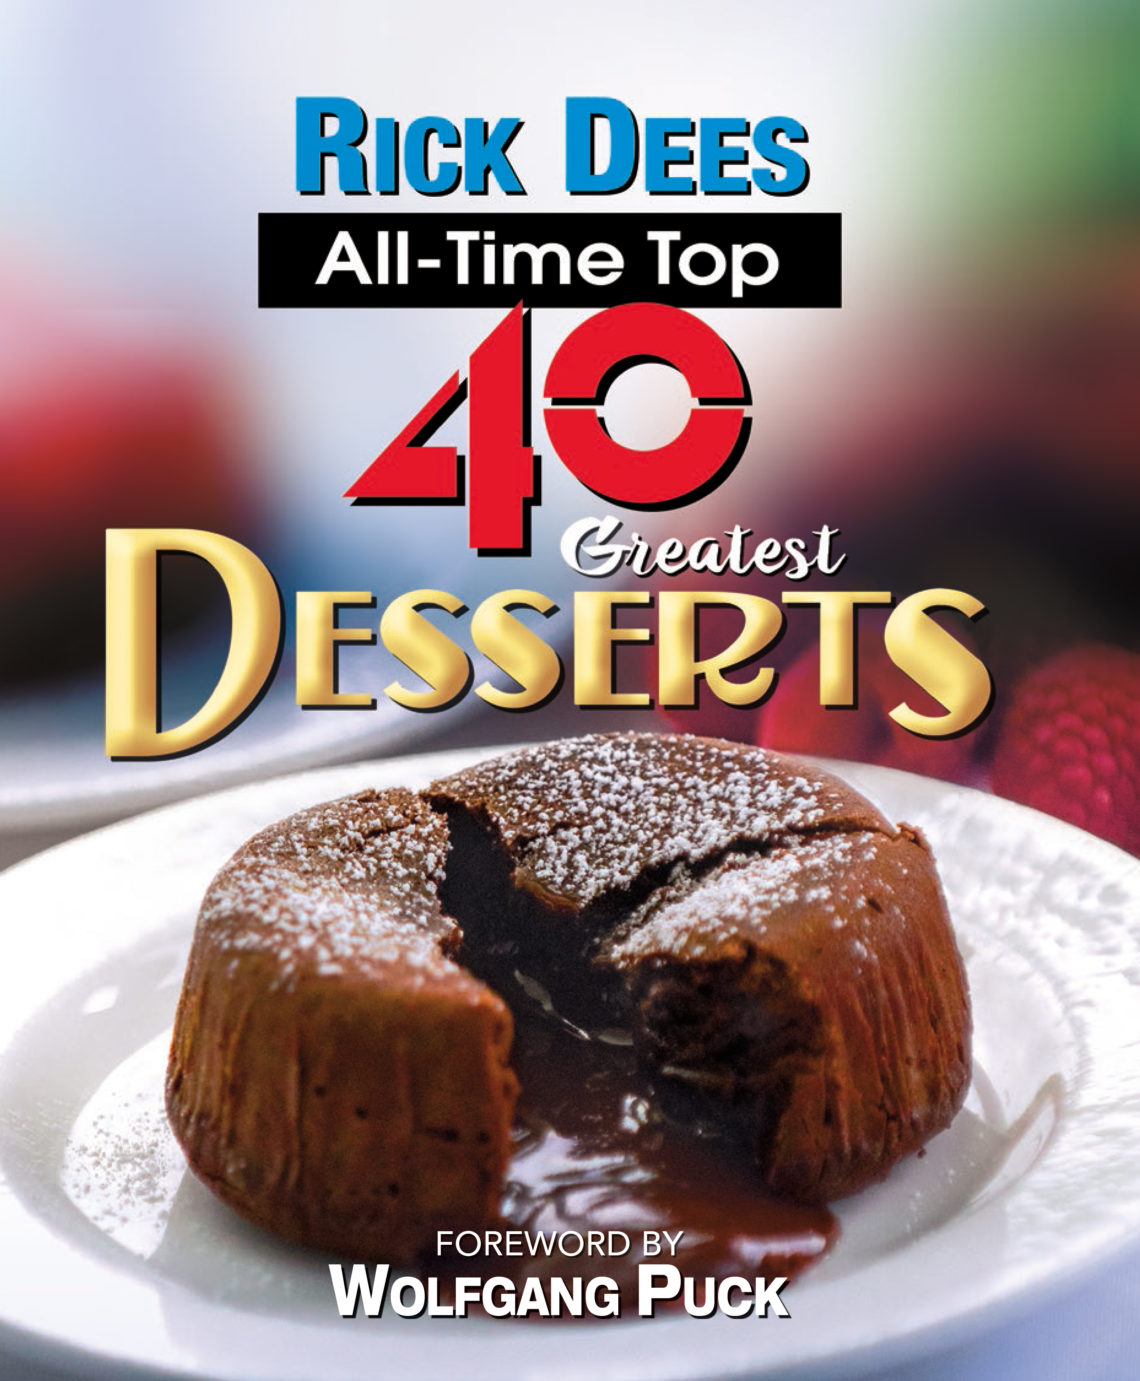 Rick Dees AllTime Top 40 Greatest Desserts HilsingerMendelson, Inc.